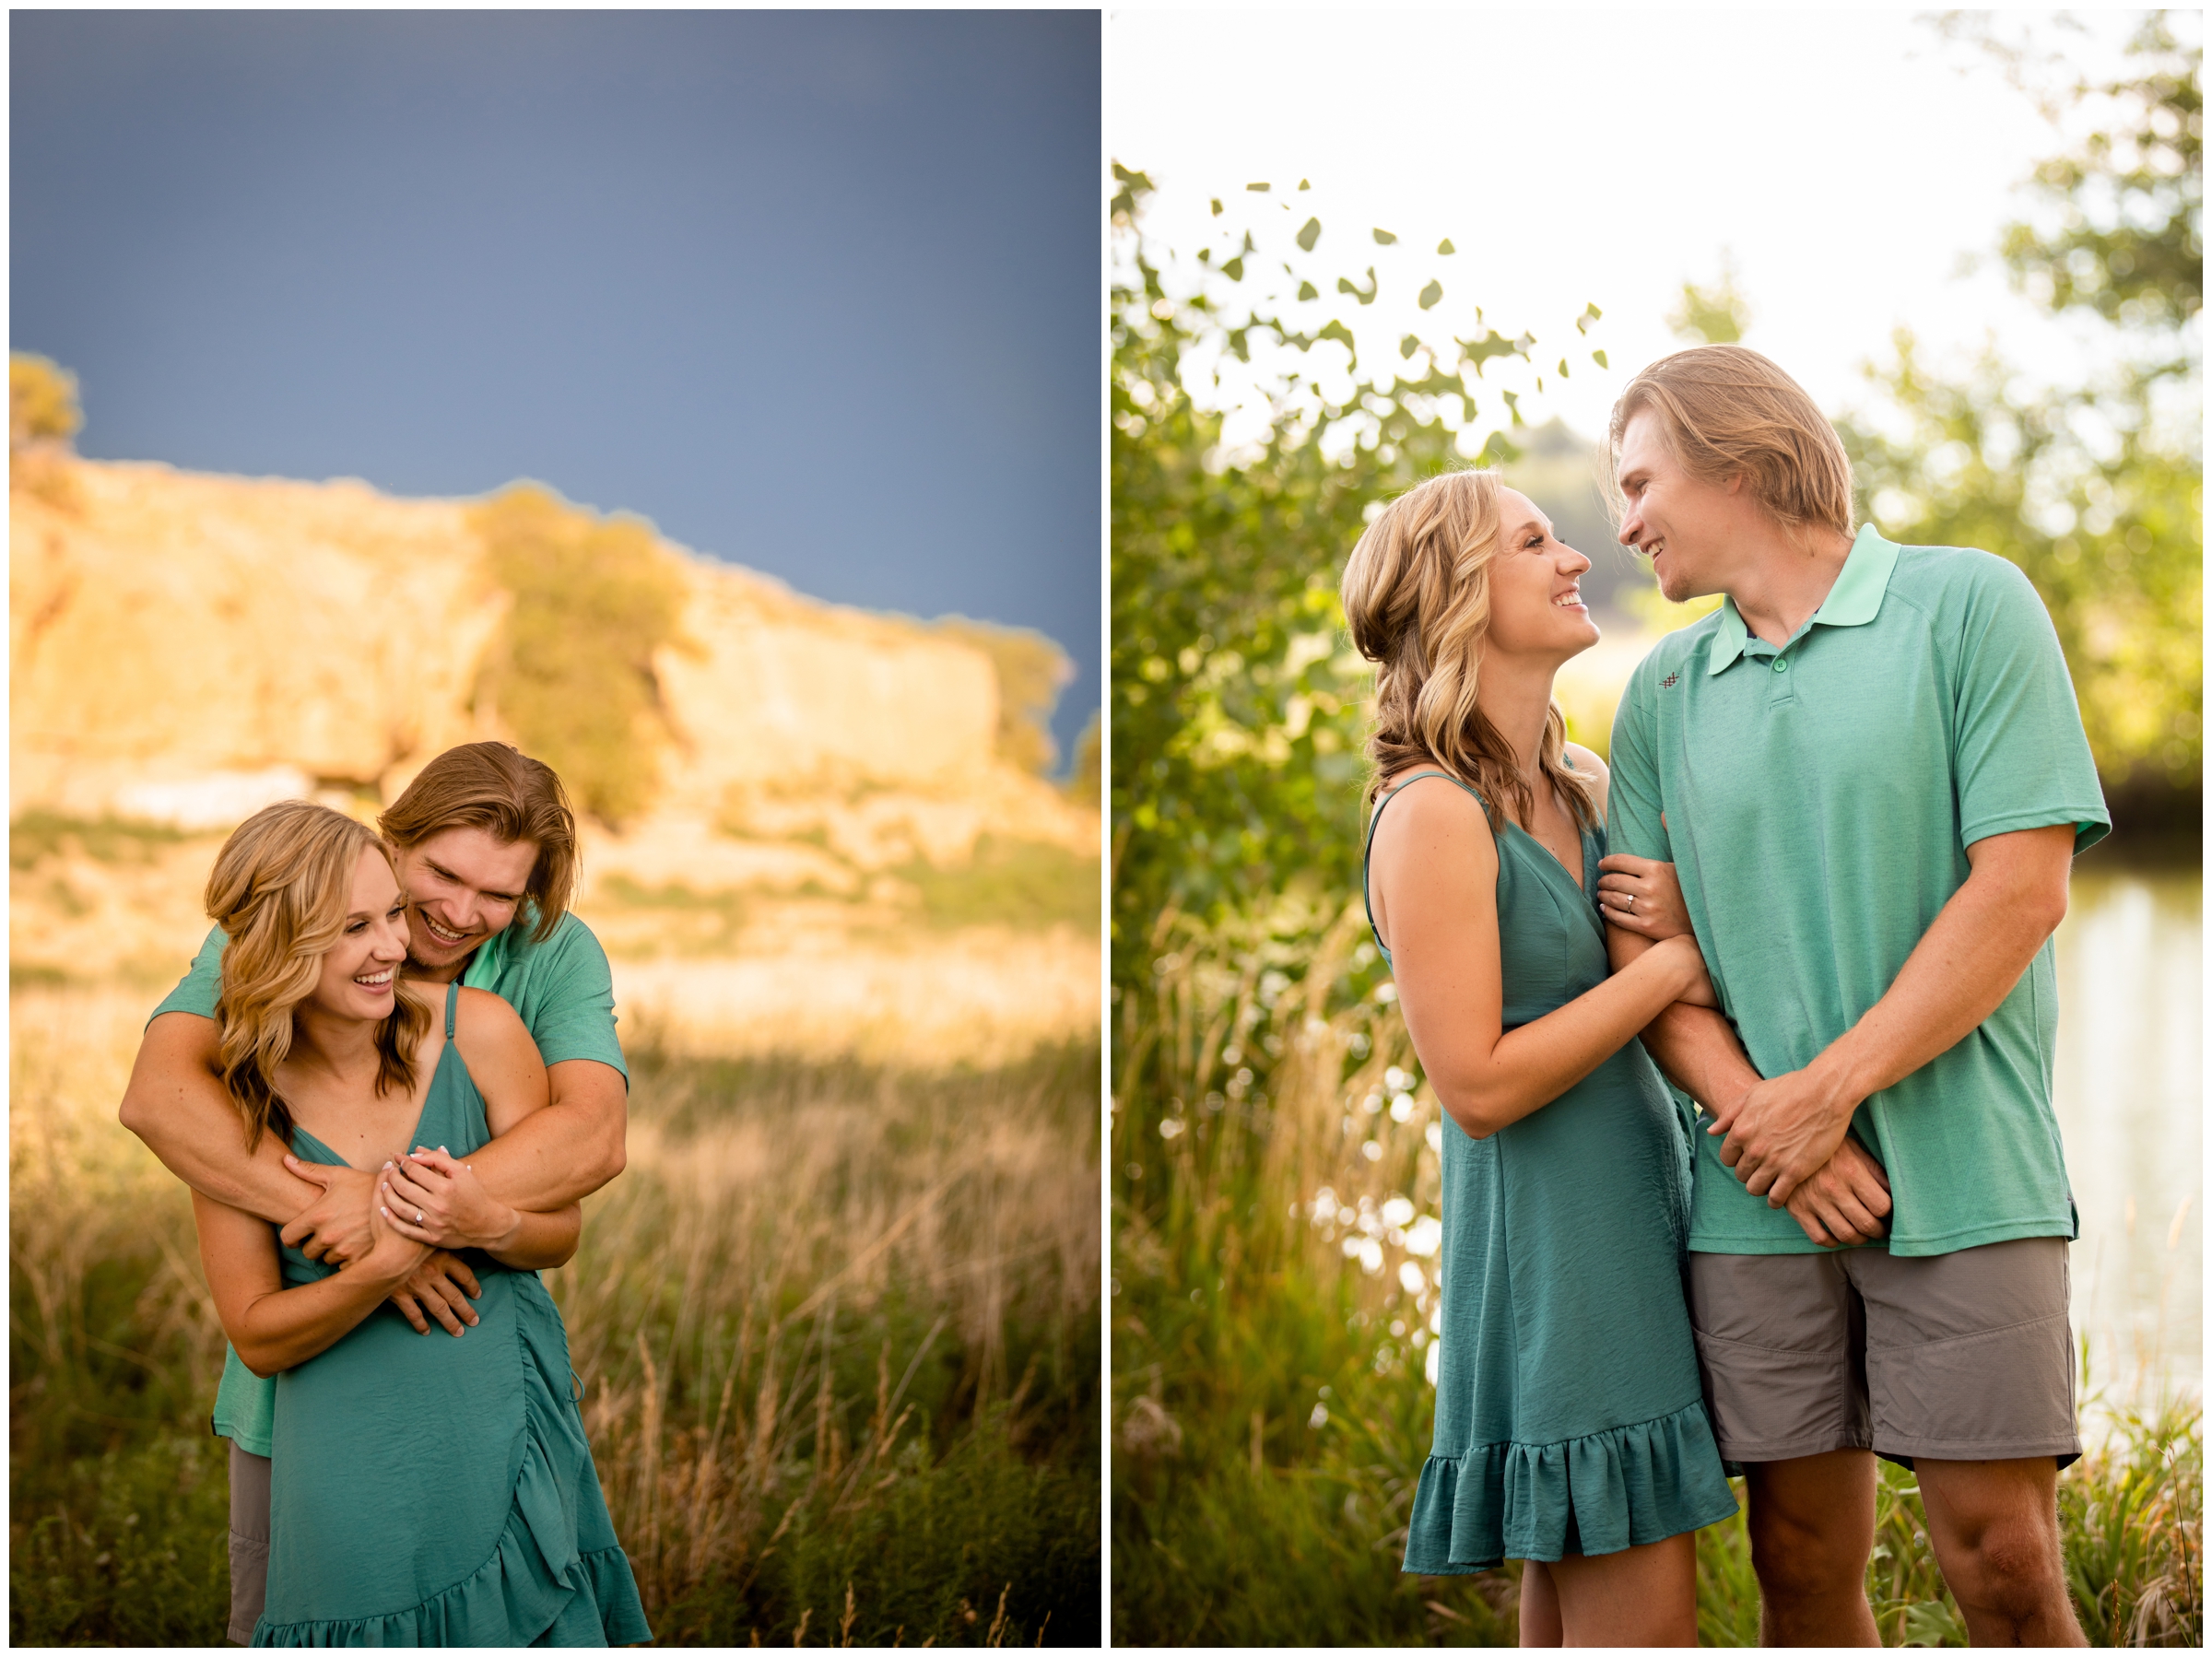 Fun and unique Longmont engagement portraits at Sandstone Ranch by Colorado wedding photographer Plum Pretty Photography